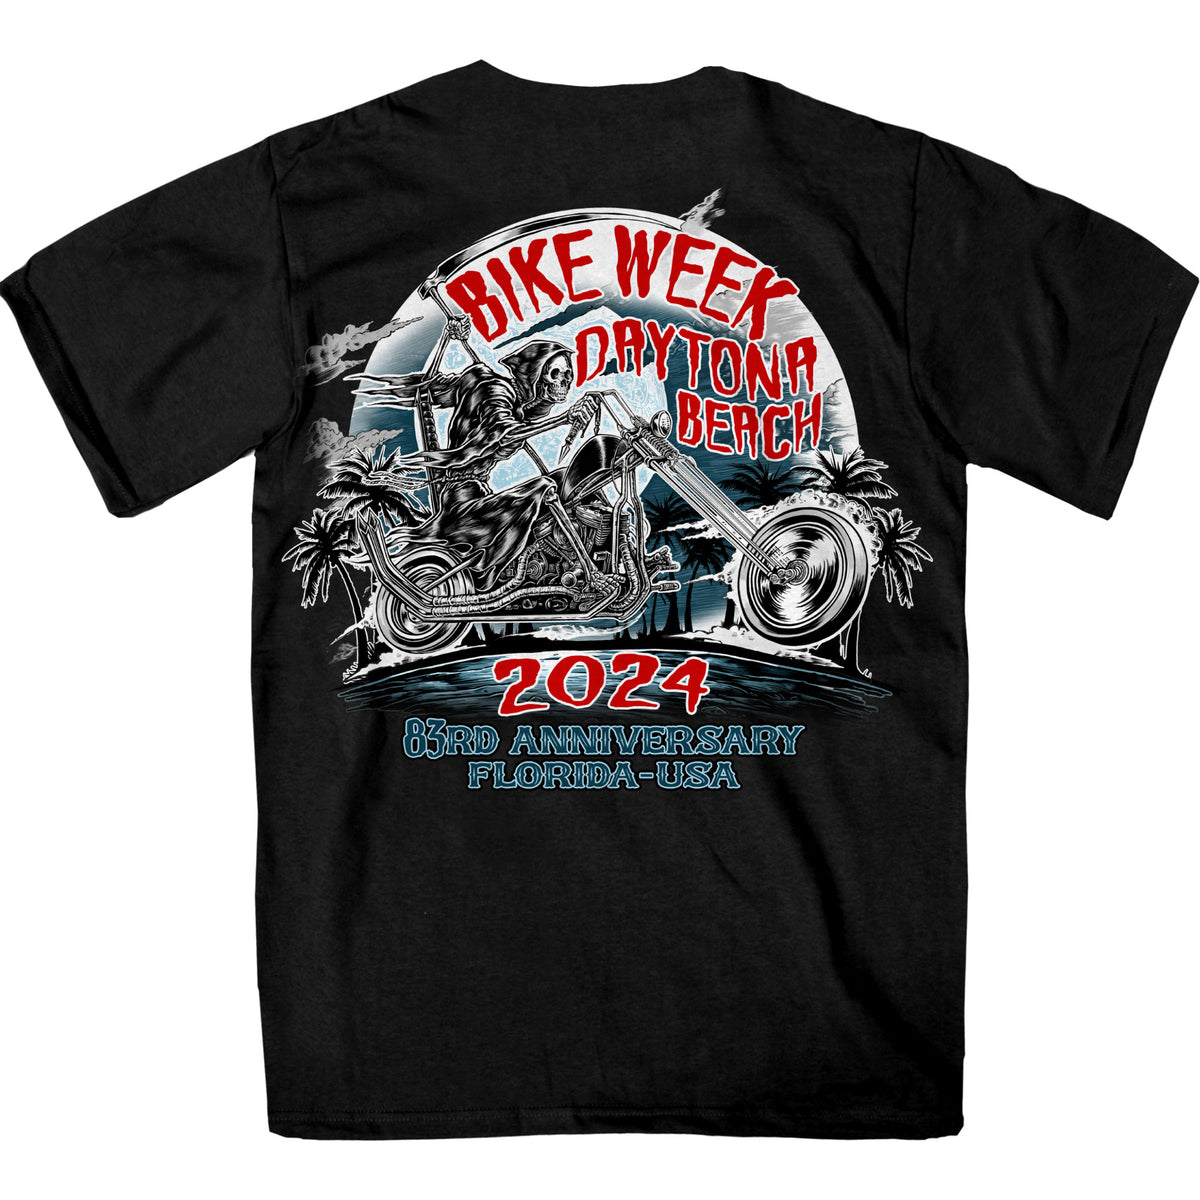 2024 Daytona Bike week Reaper Rider Black T-shirt EDM1198